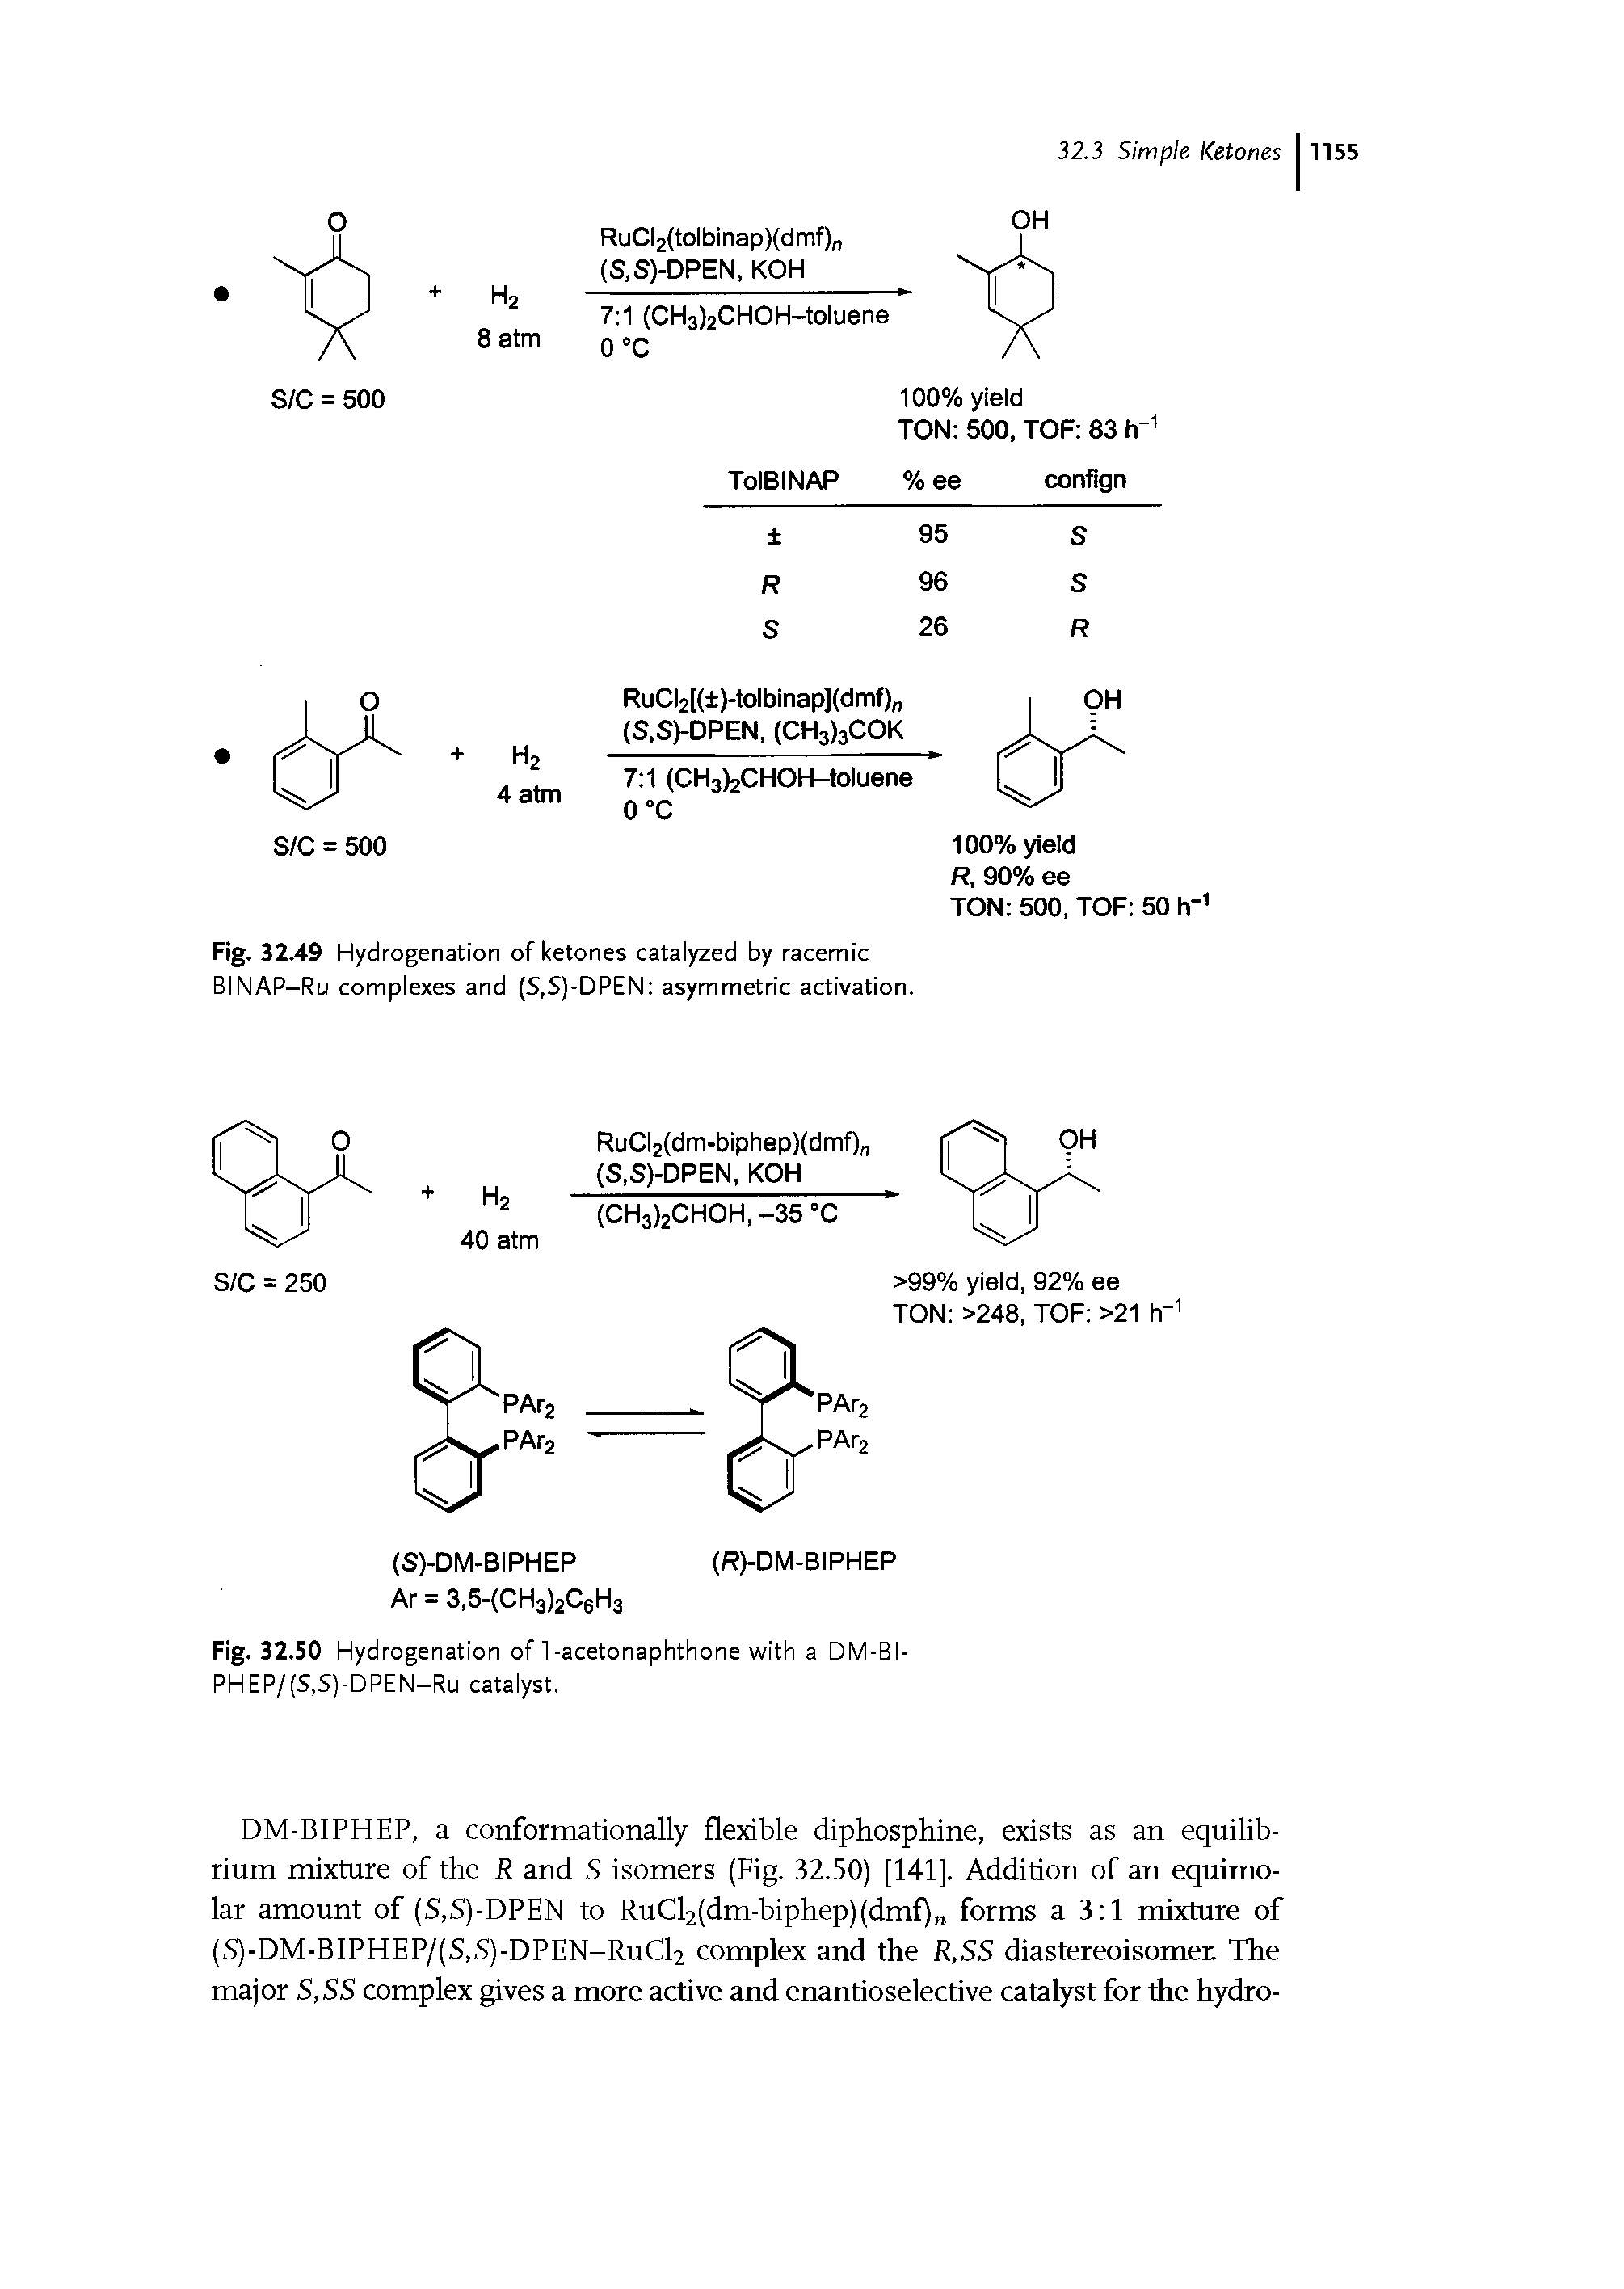 Fig. 32.50 Hydrogenation of 1-acetonaphthone with a DM-BI-PHEP/(S,S)-DPEN-Ru catalyst.